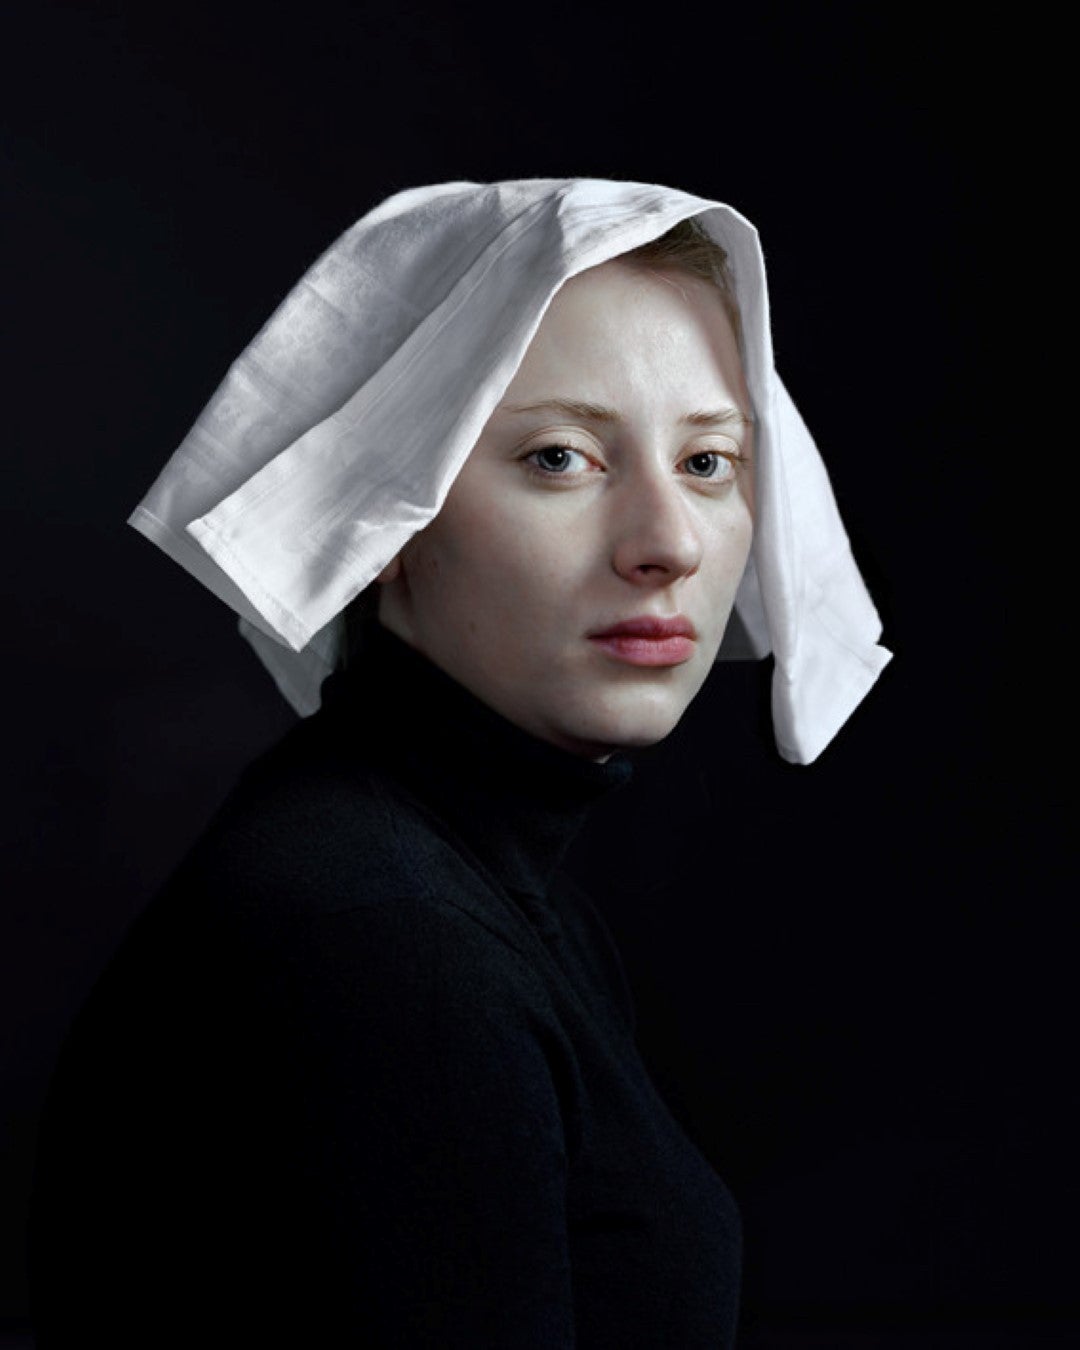 Hendrik Kerstens Portrait Photograph - Napkin